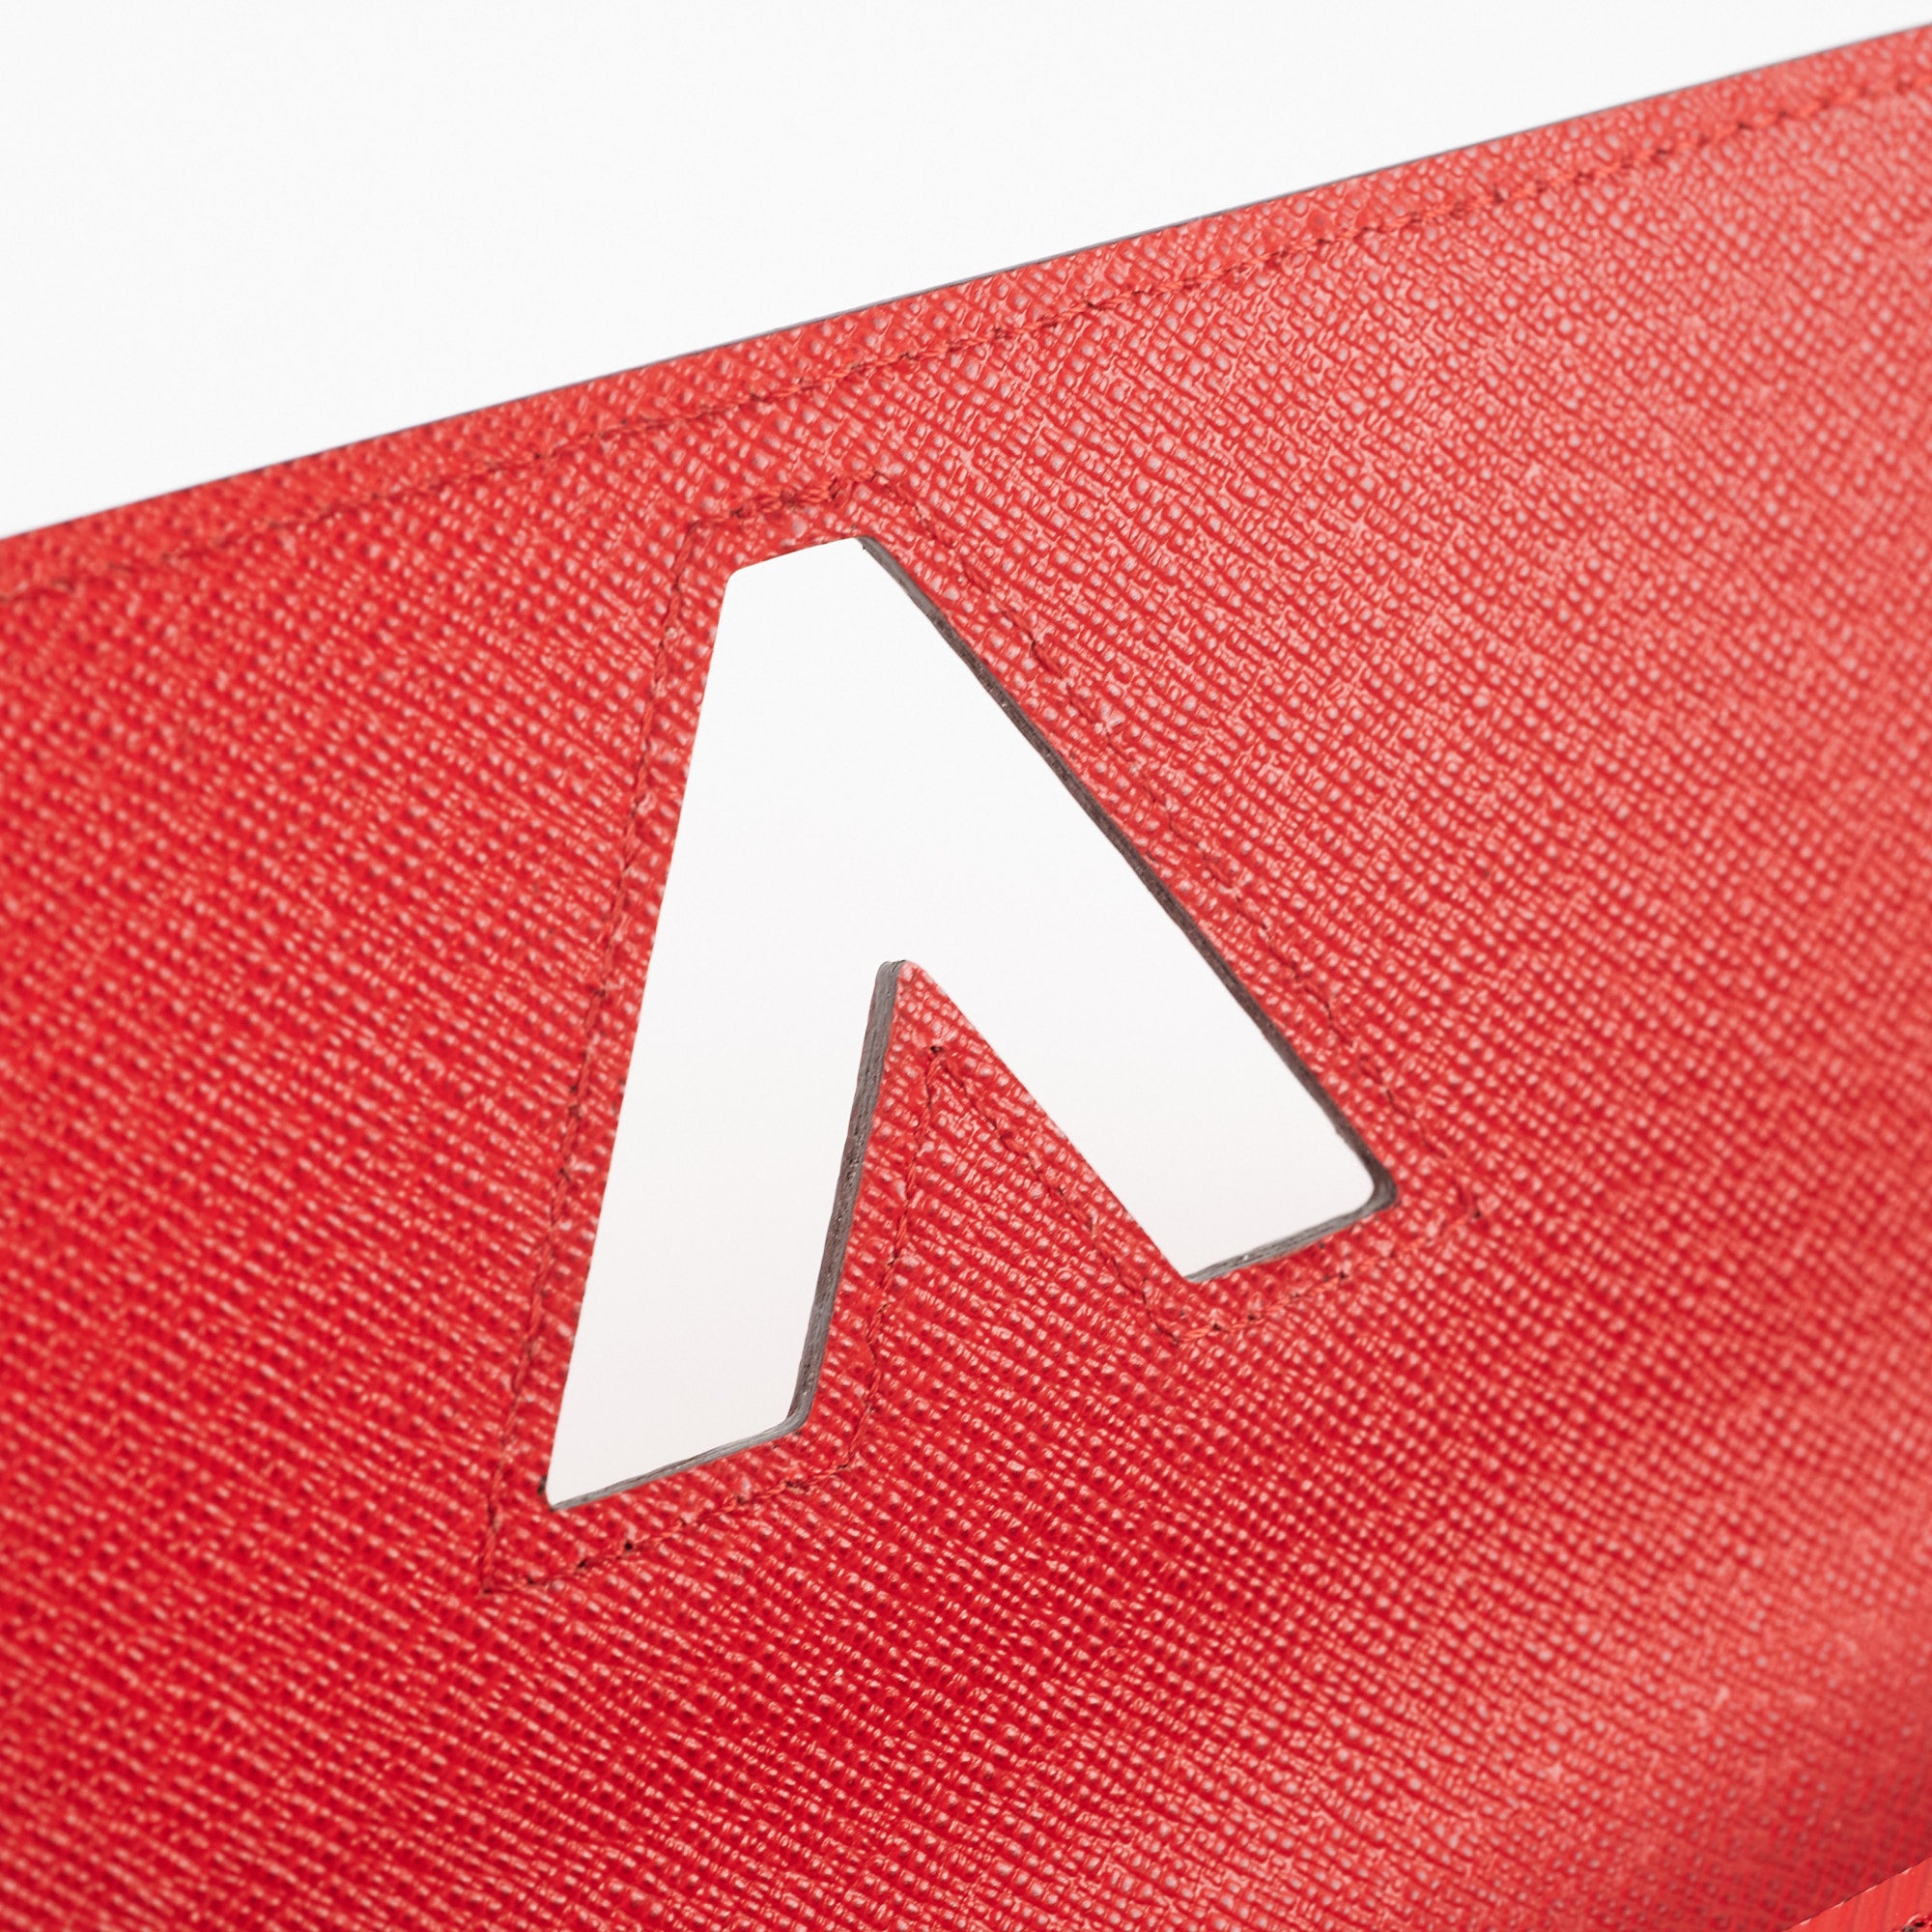 Designer Exchange Ltd - ❤ A Louis Vuitton Wallet with a twist